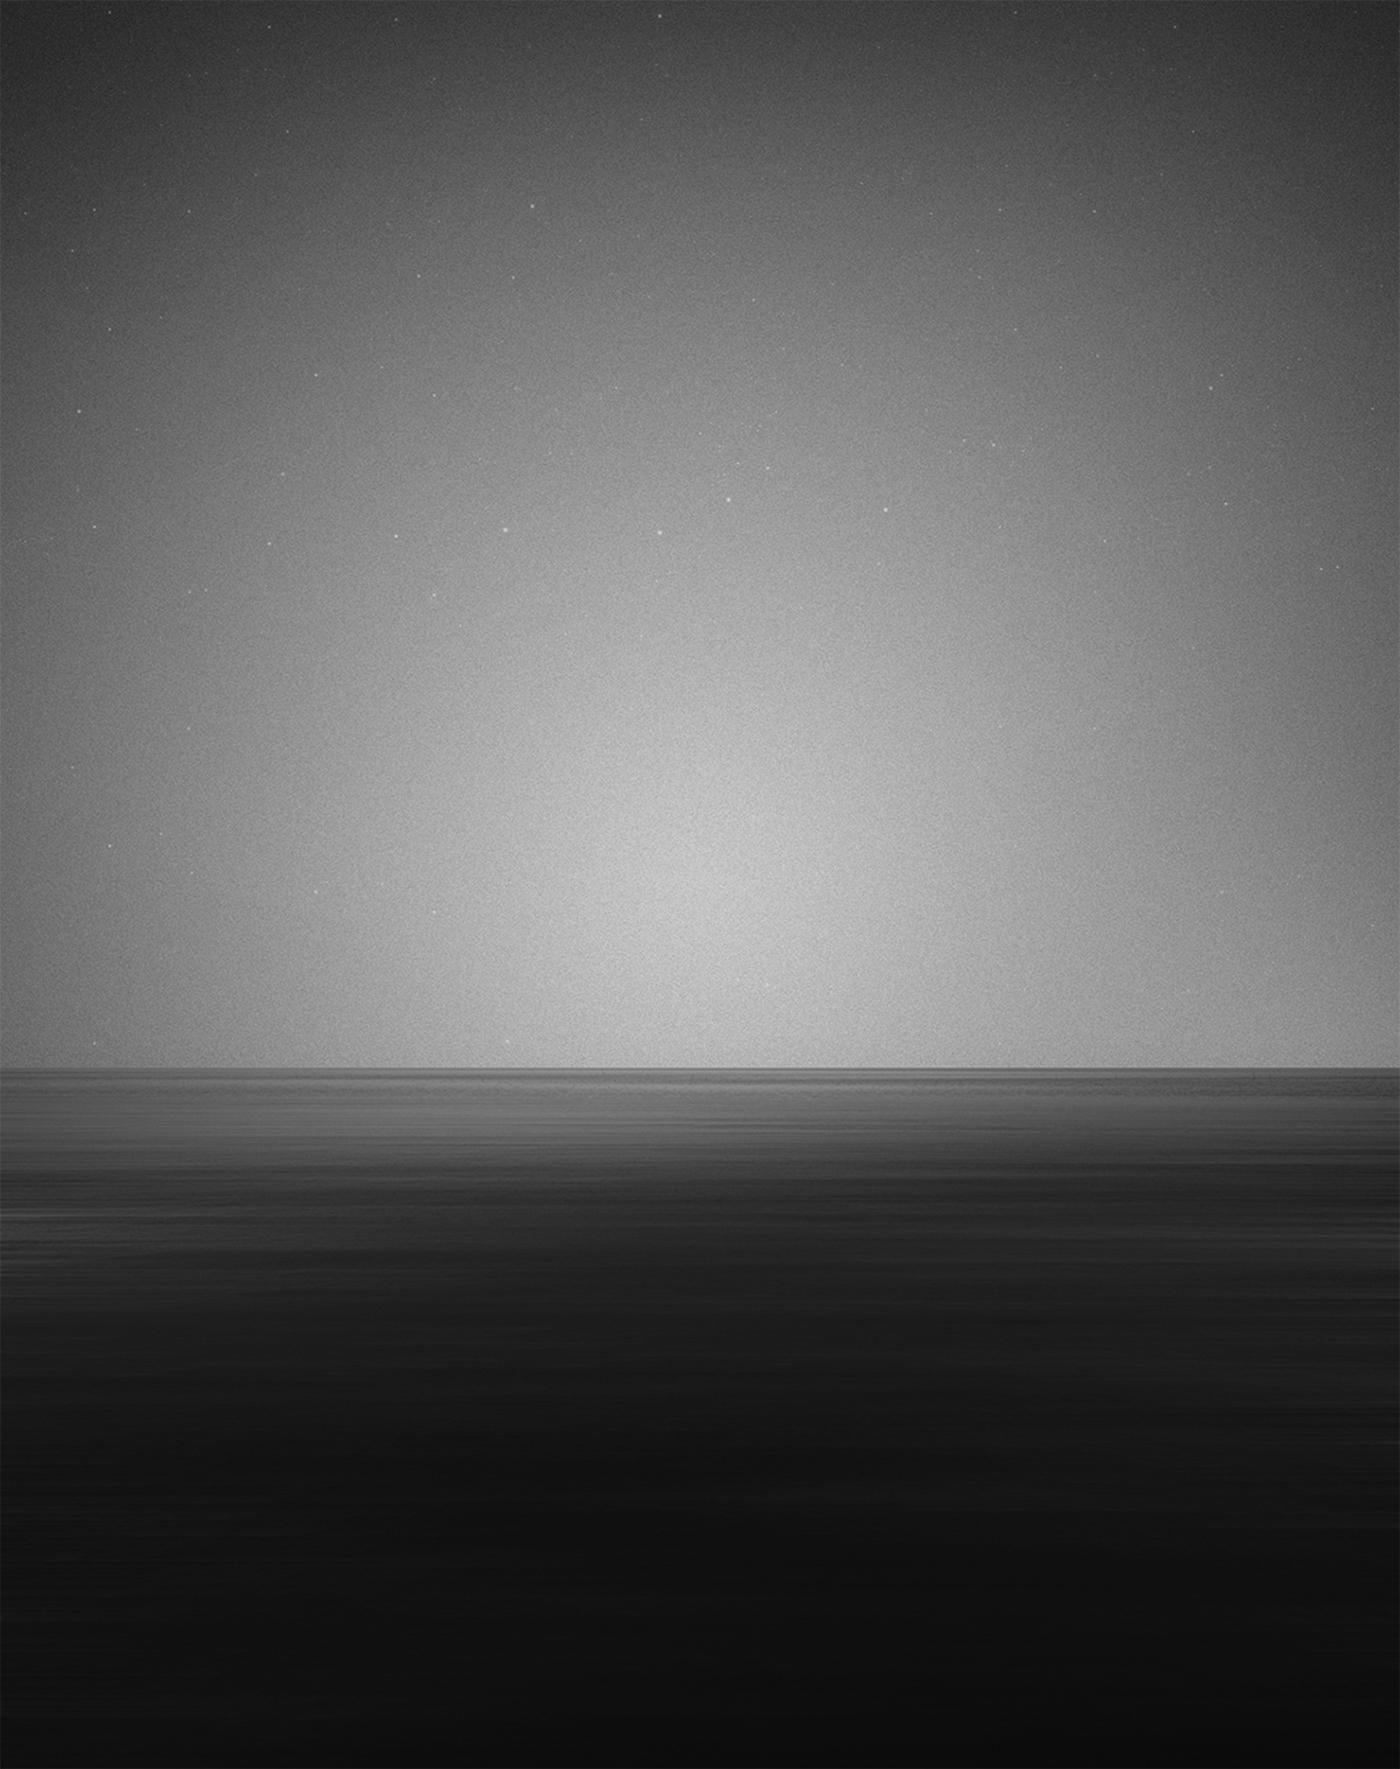 Horizons digital art series sea landscapes photorealistic monochrome minimalistic